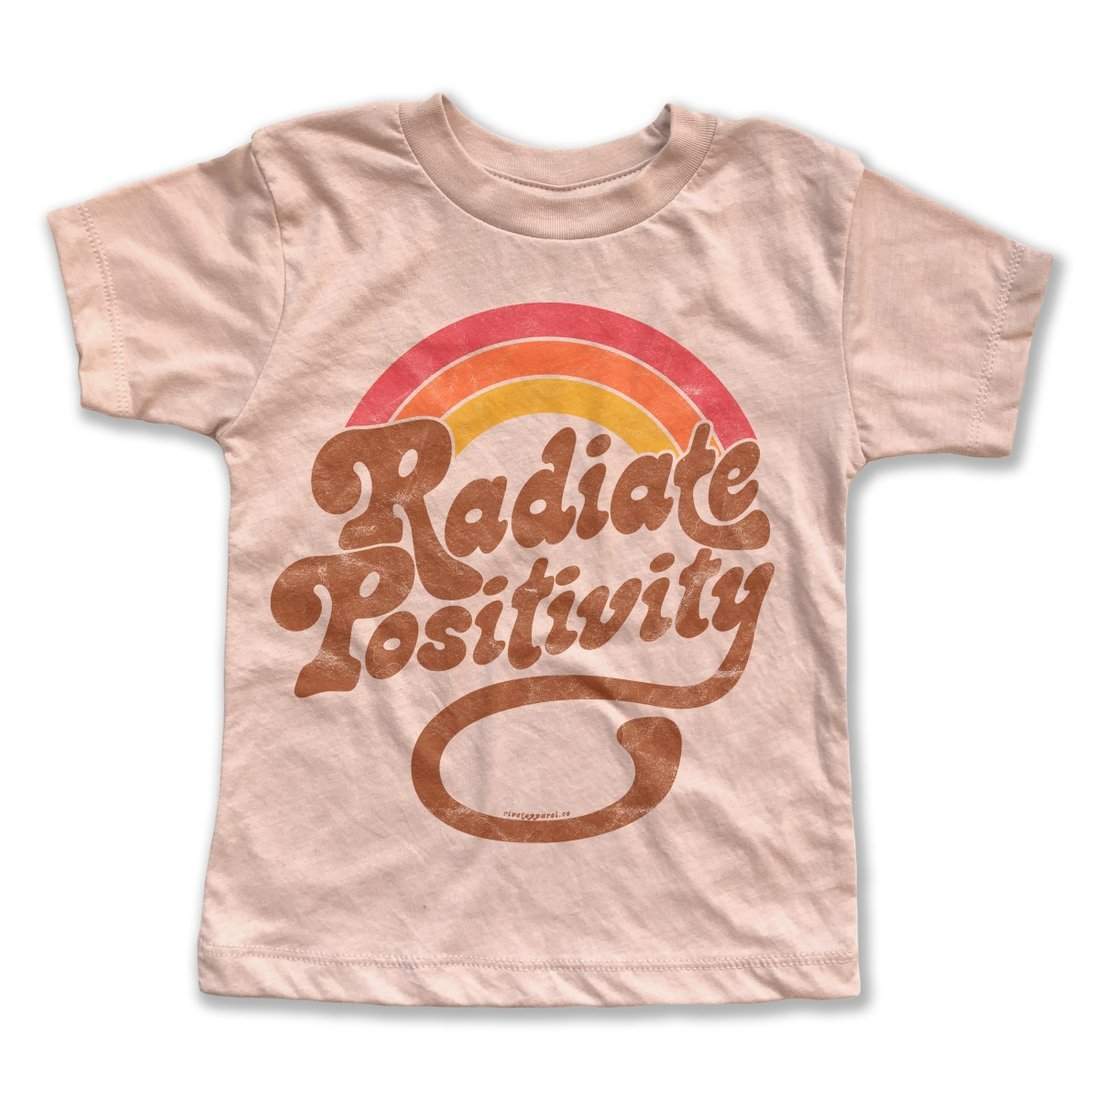 Radiate Positivity Kids Tee-Rivet Apparel Co.